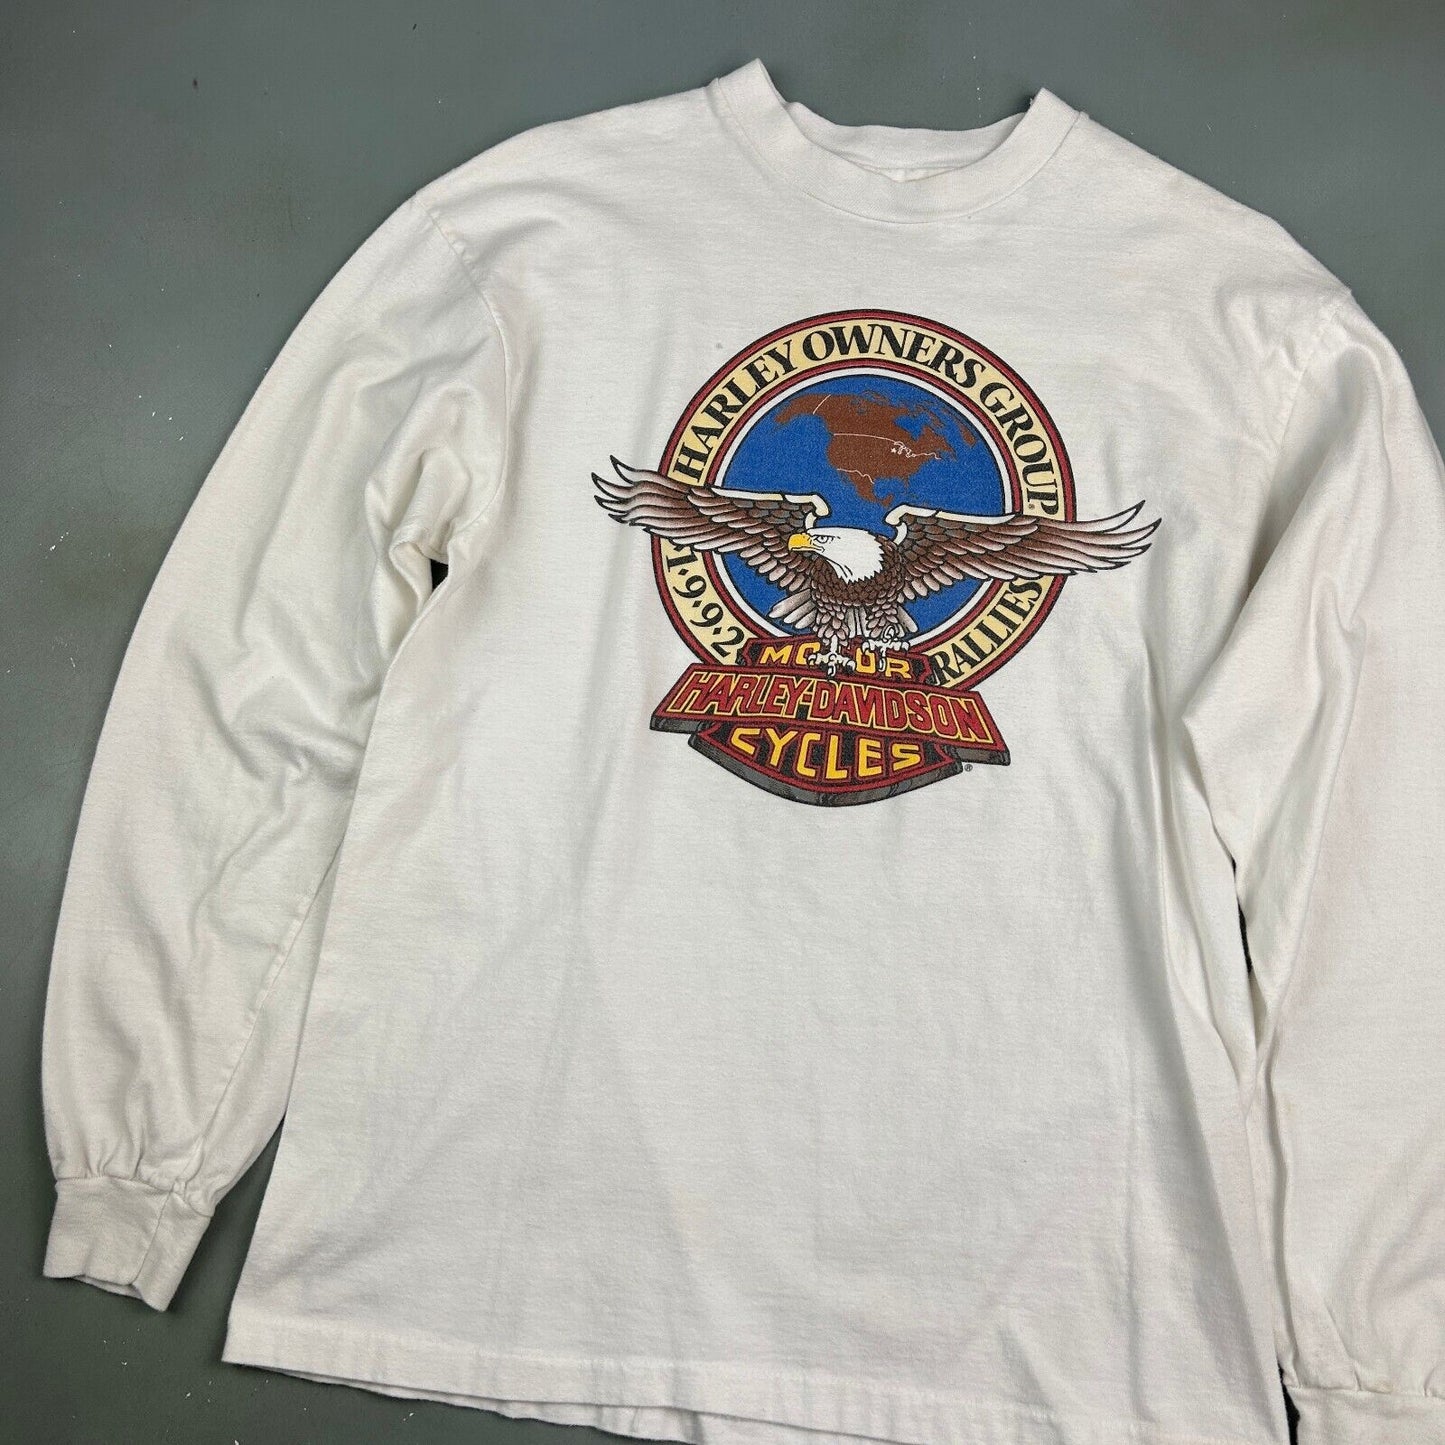 VINTAGE 1992 | Harley Davidson Owners Group Long Sleeve T-Shirt sz M Adult